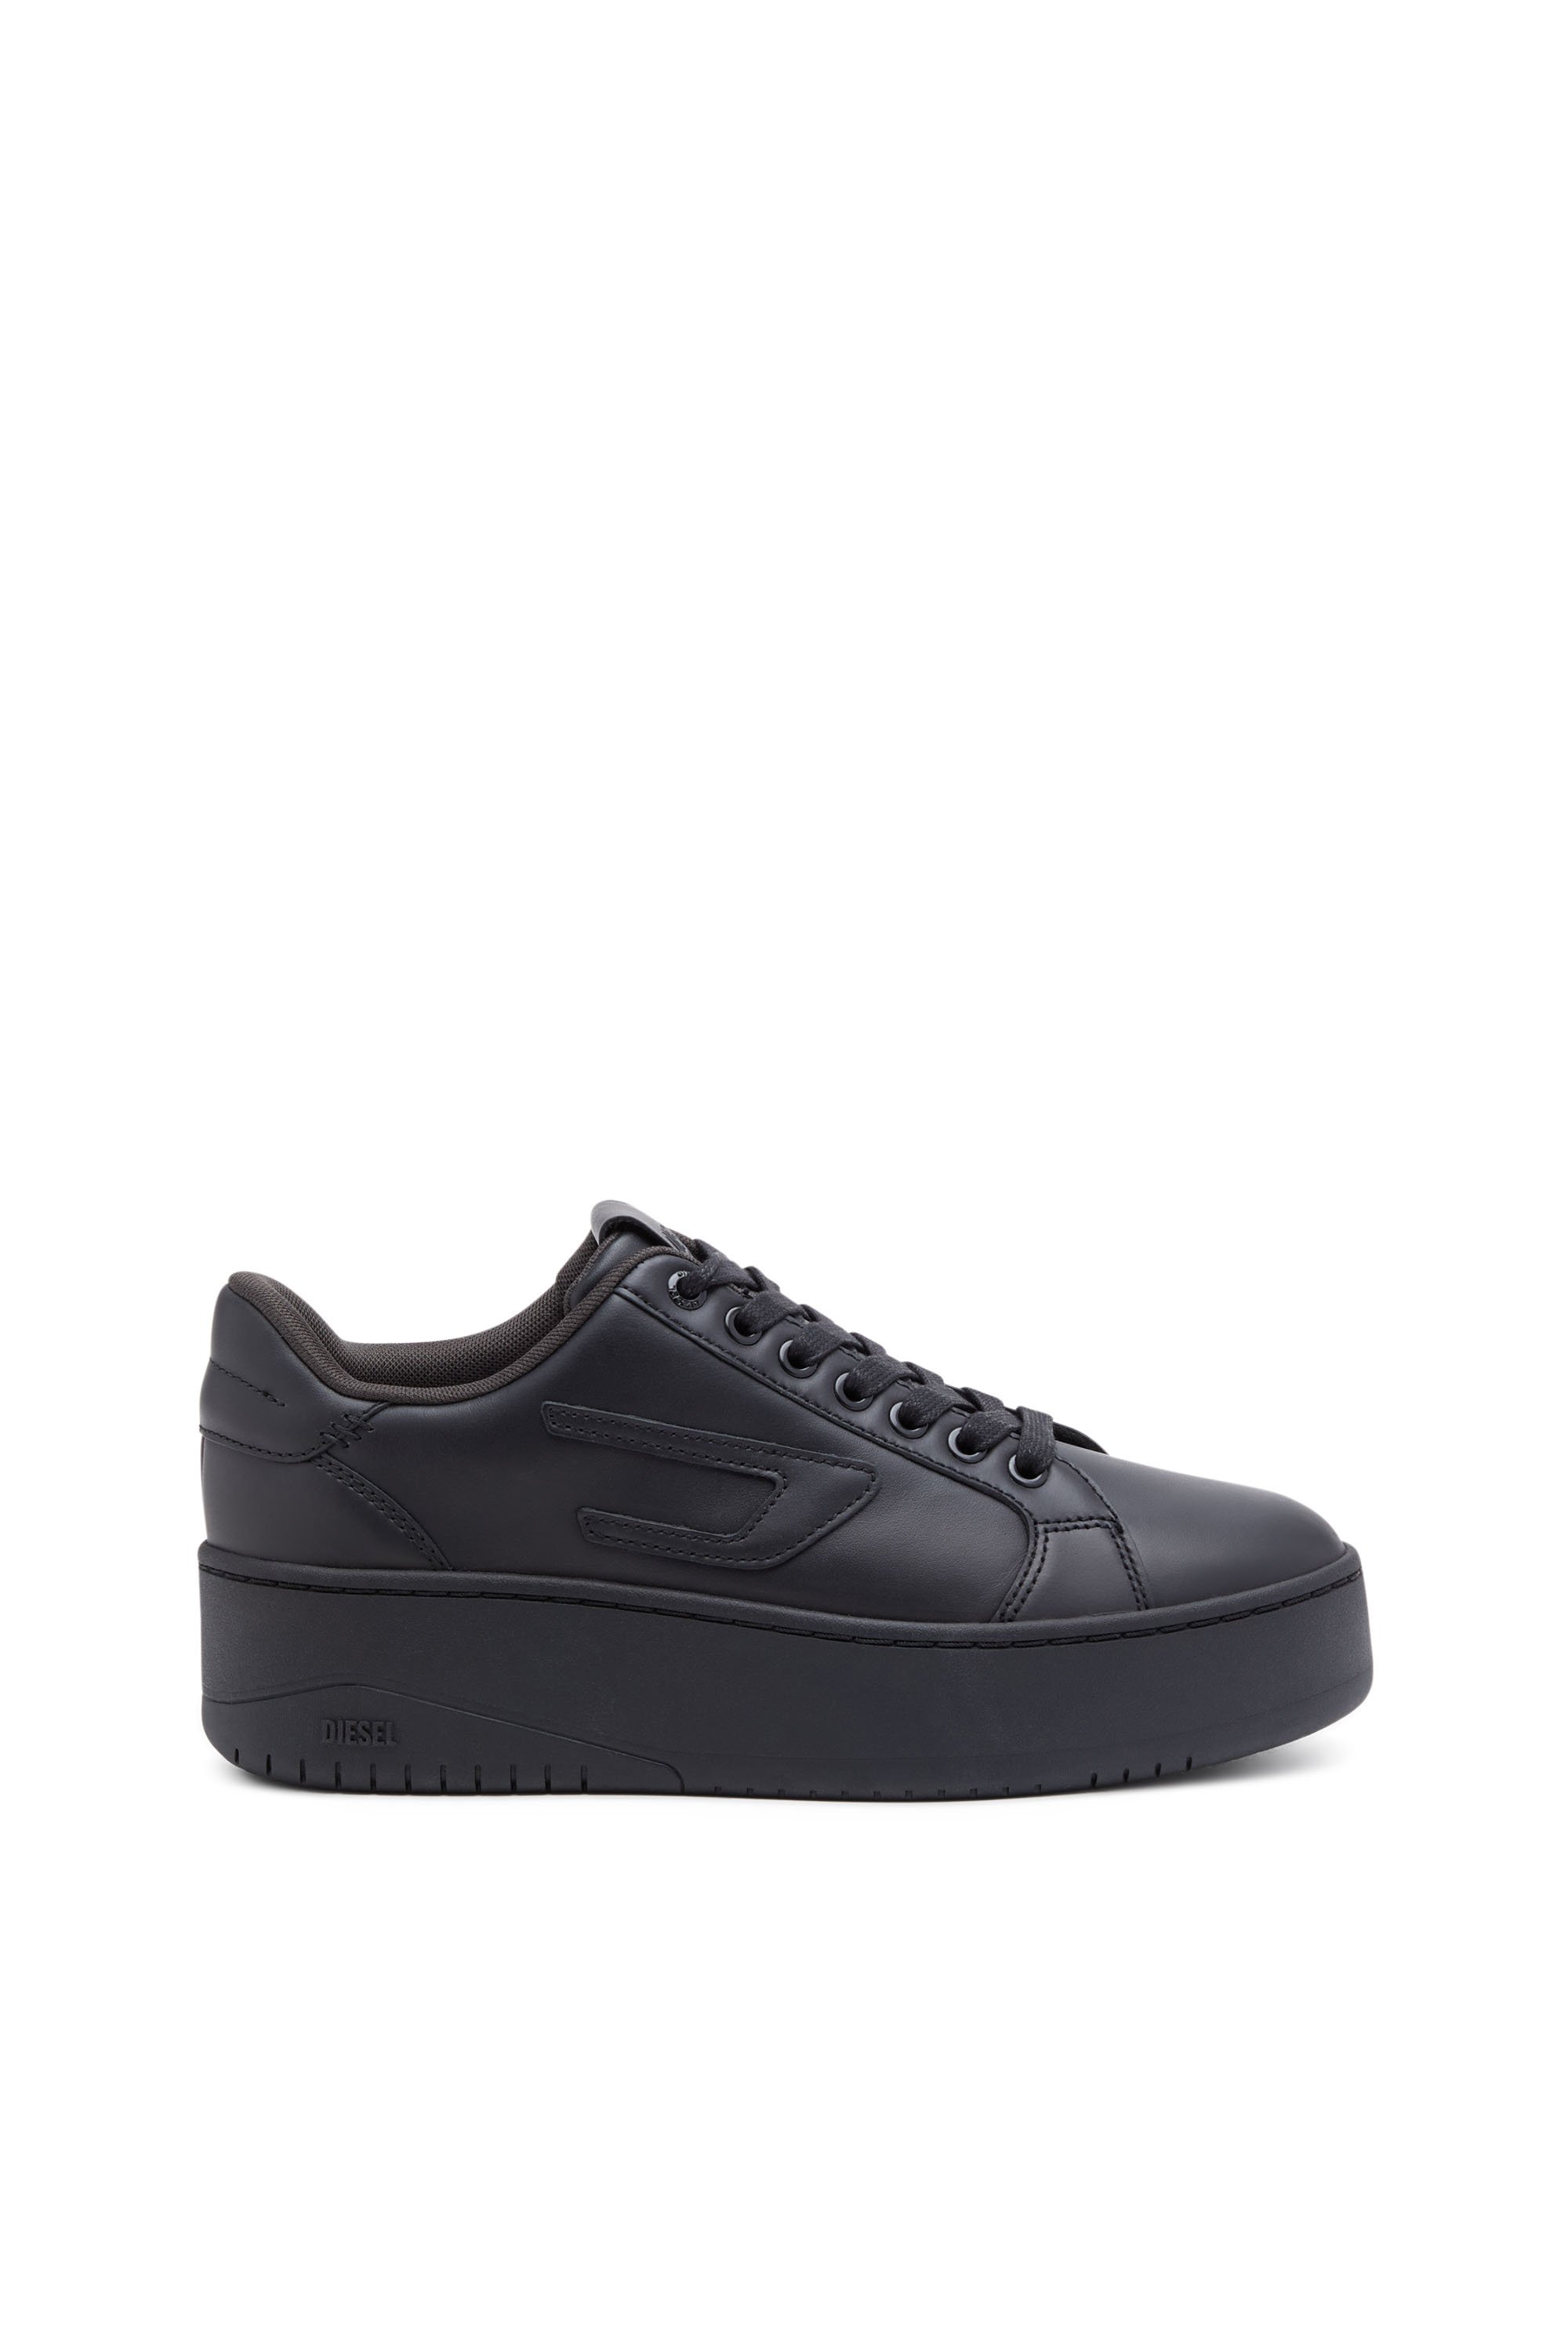 Diesel - S-Athene Bold-Flatform sneakers in leather - Sneakers - Woman - Black